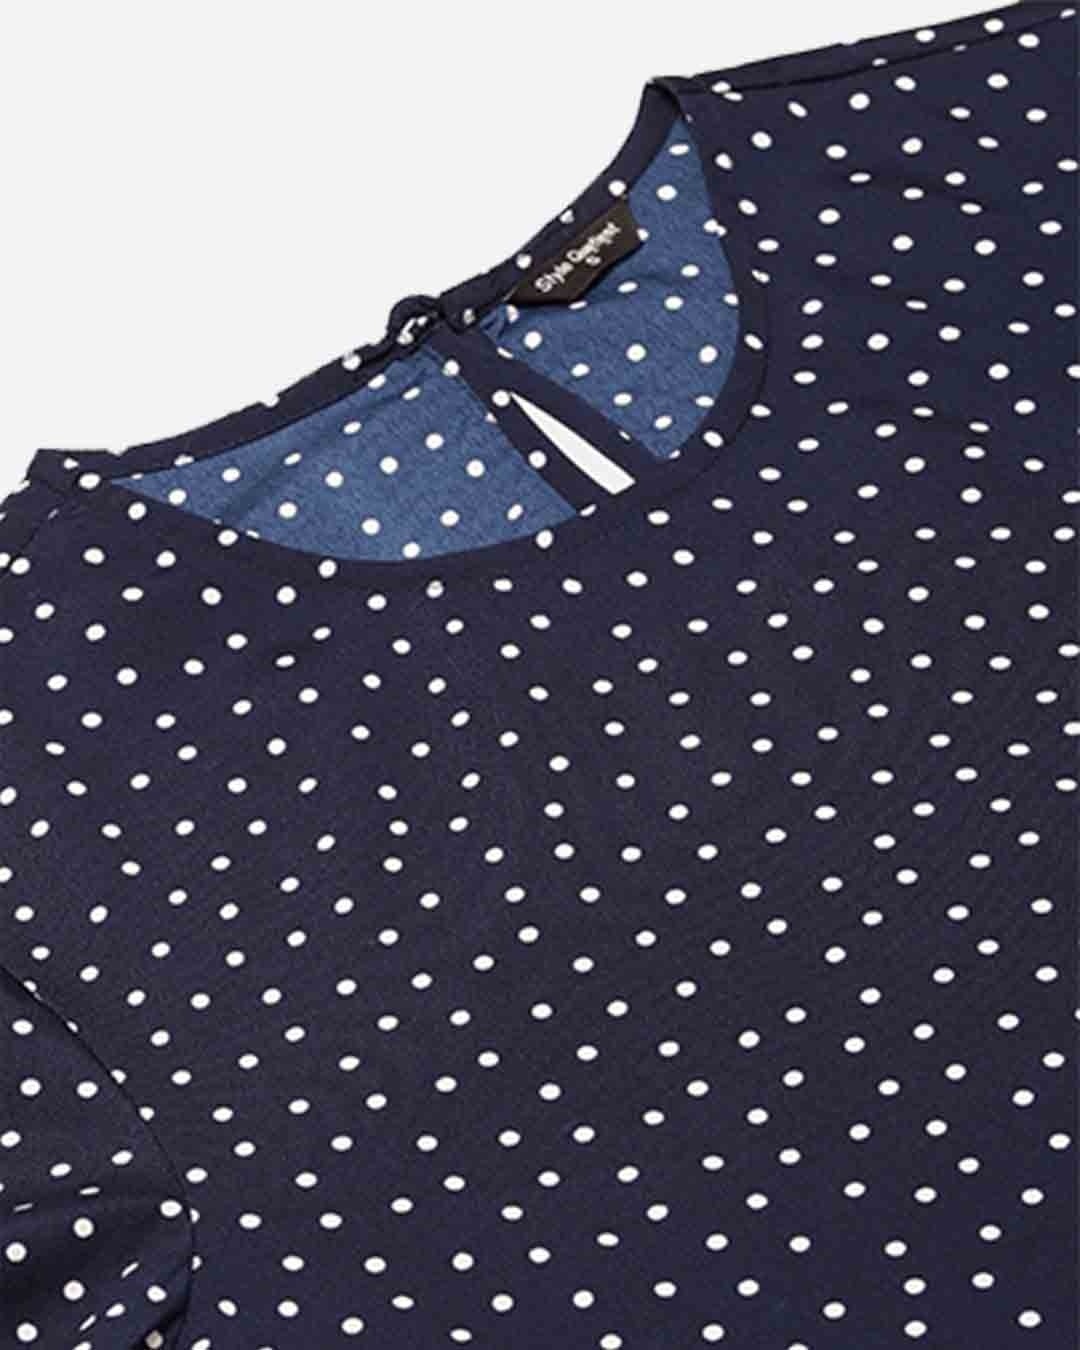 Shop Women's Navy Blue & White Polka Dot Print Regular Top